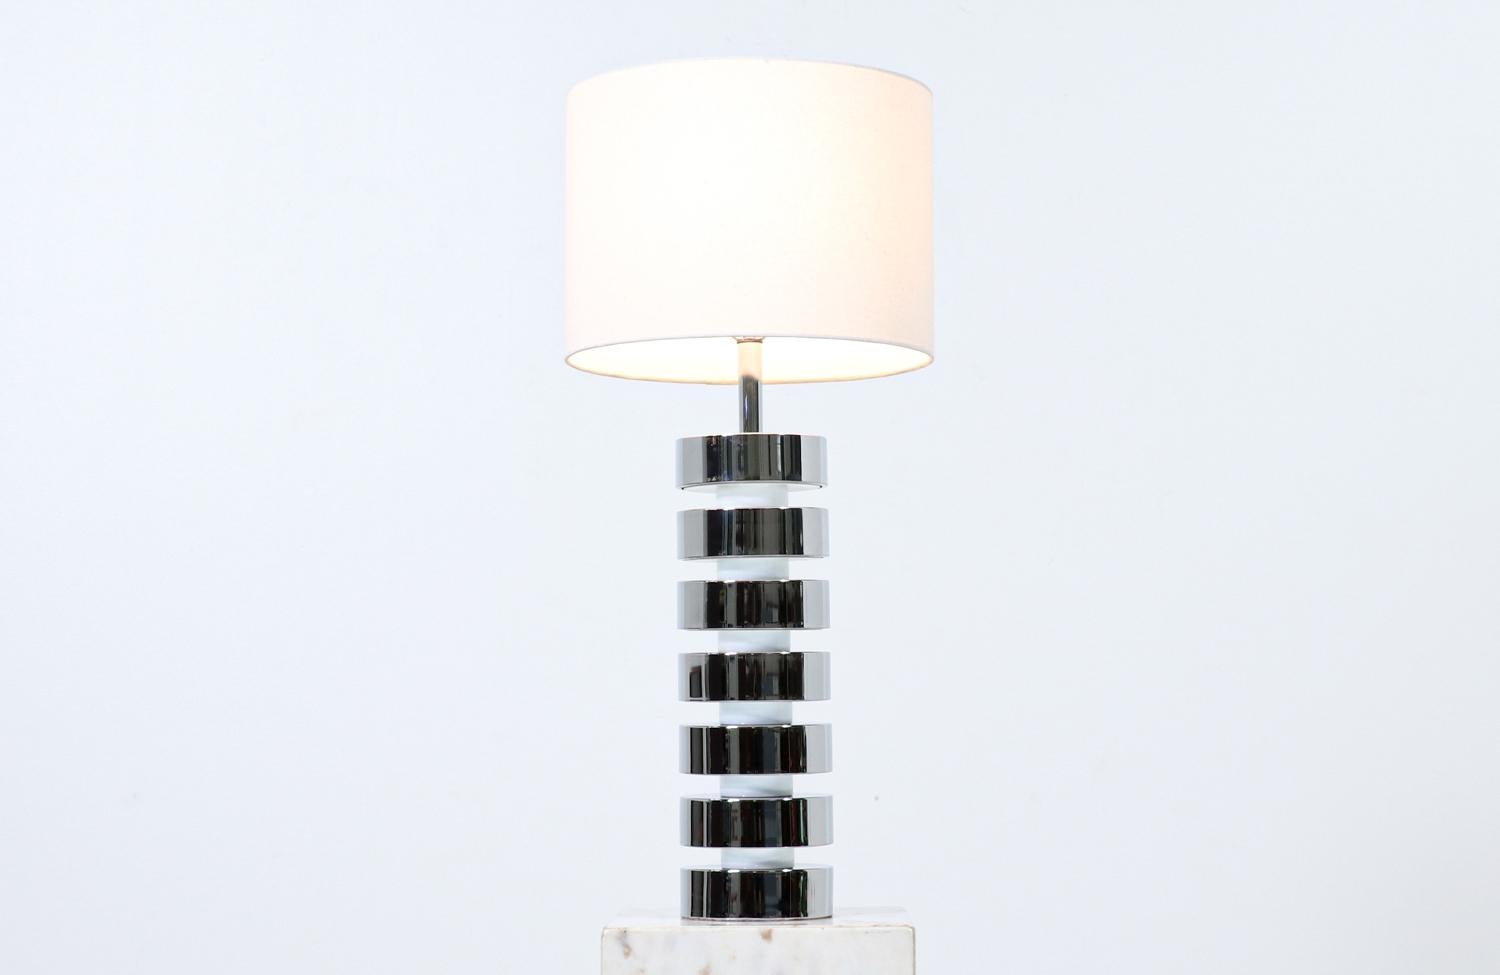 Mid-Century Modern chrome disc column table lamp.

Dimensions
33.50 in H x 6 in W x 6 in D
Shade
11 in H x 15 in W x 15 in D

